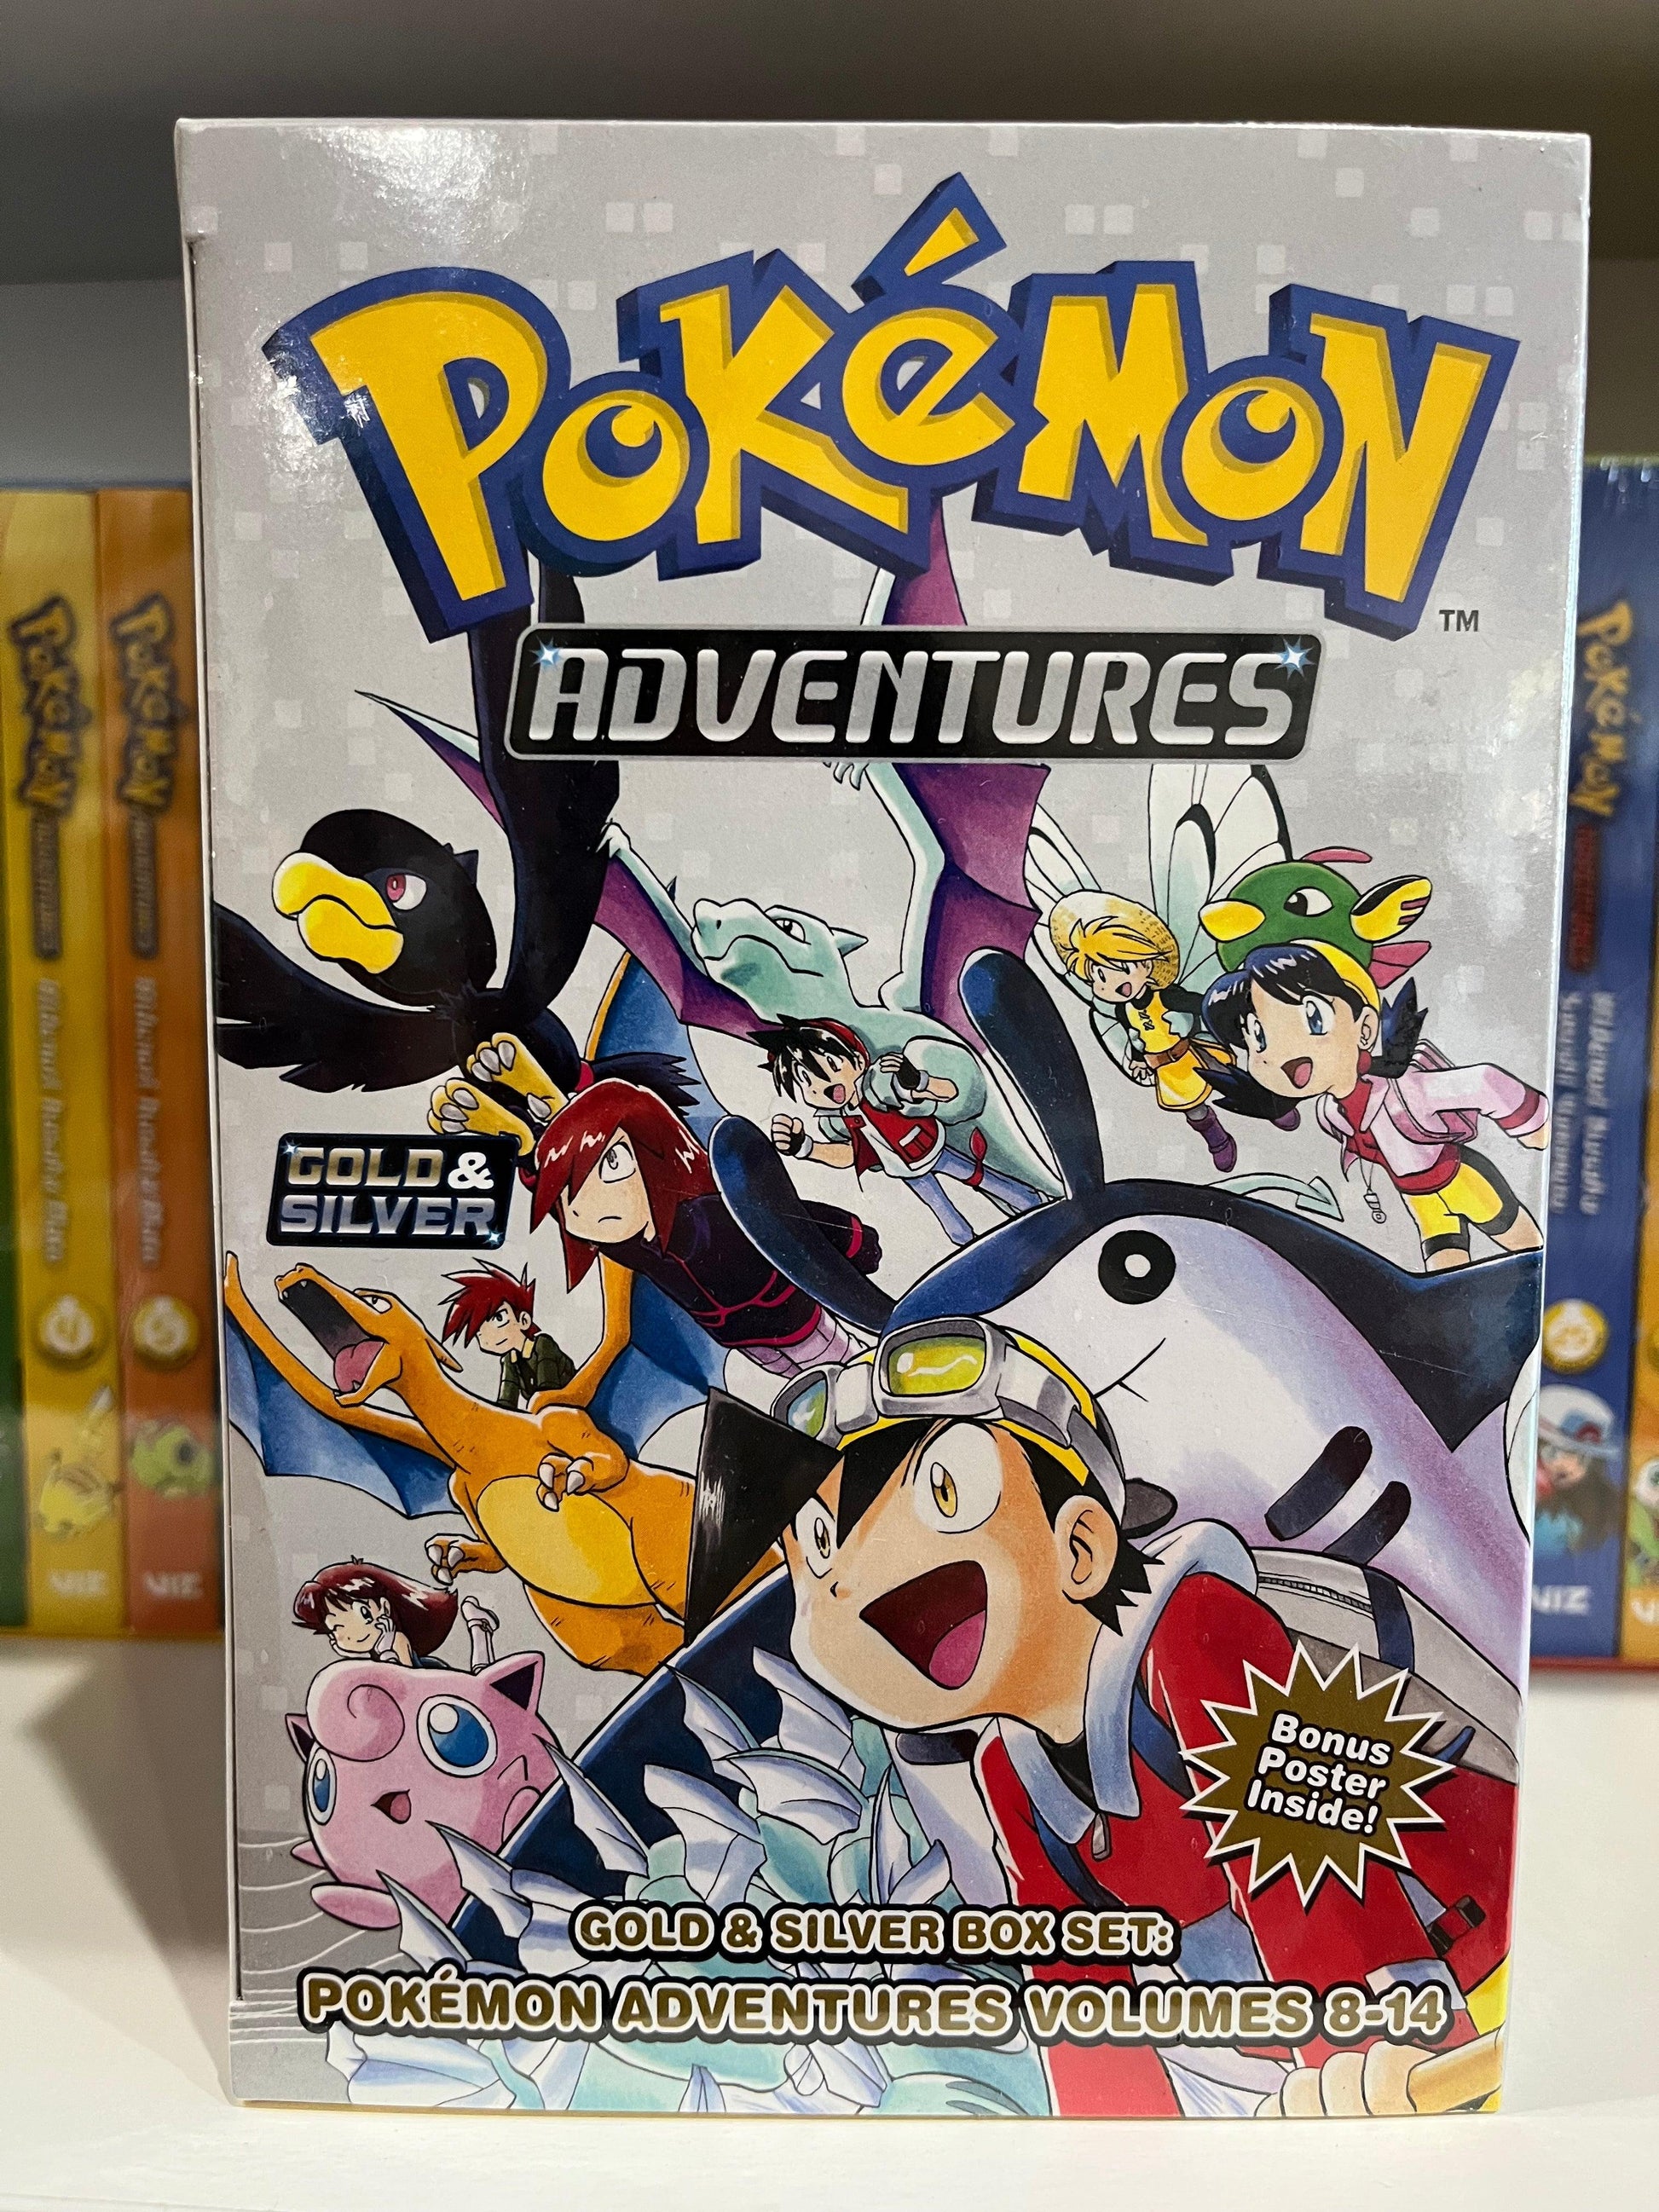 Pokémon Adventures: Pokémon Adventures (Emerald), Vol. 29 (Series